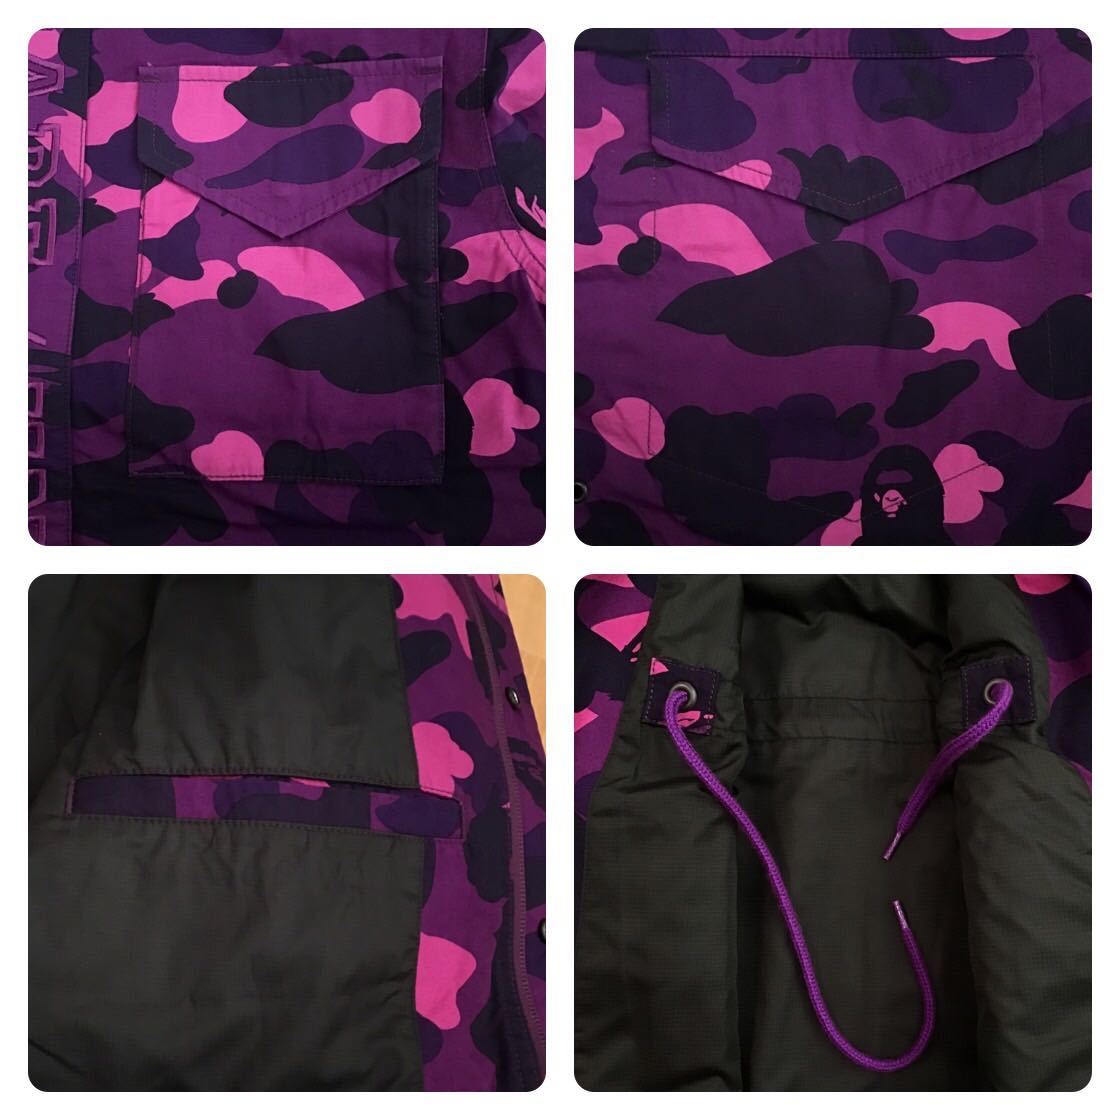 undefeated × BAPE M65 military jacket Lサイズ purple camo a bathing ape BAPE エイプ ベイプ アベイシングエイプ ジャケット 迷彩 b53_画像7